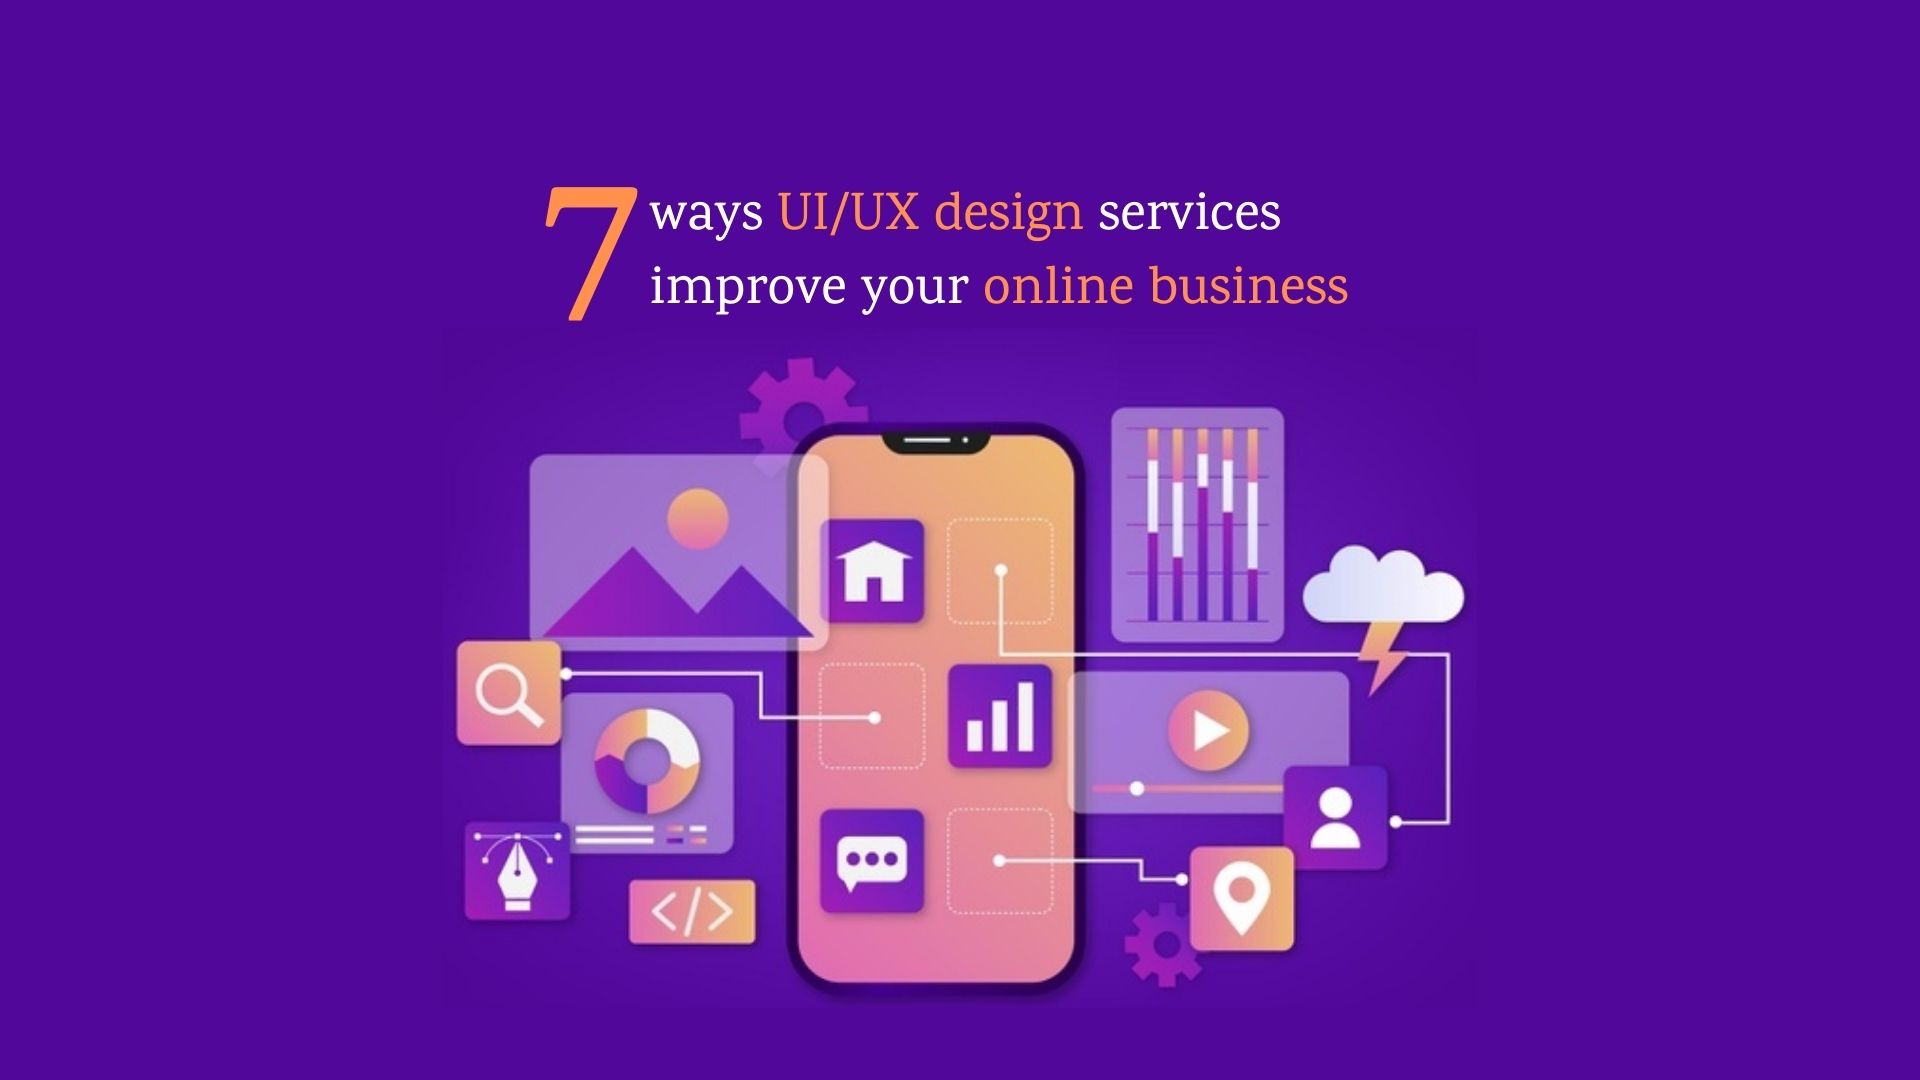 7 ways UI/UX design services improve your online business